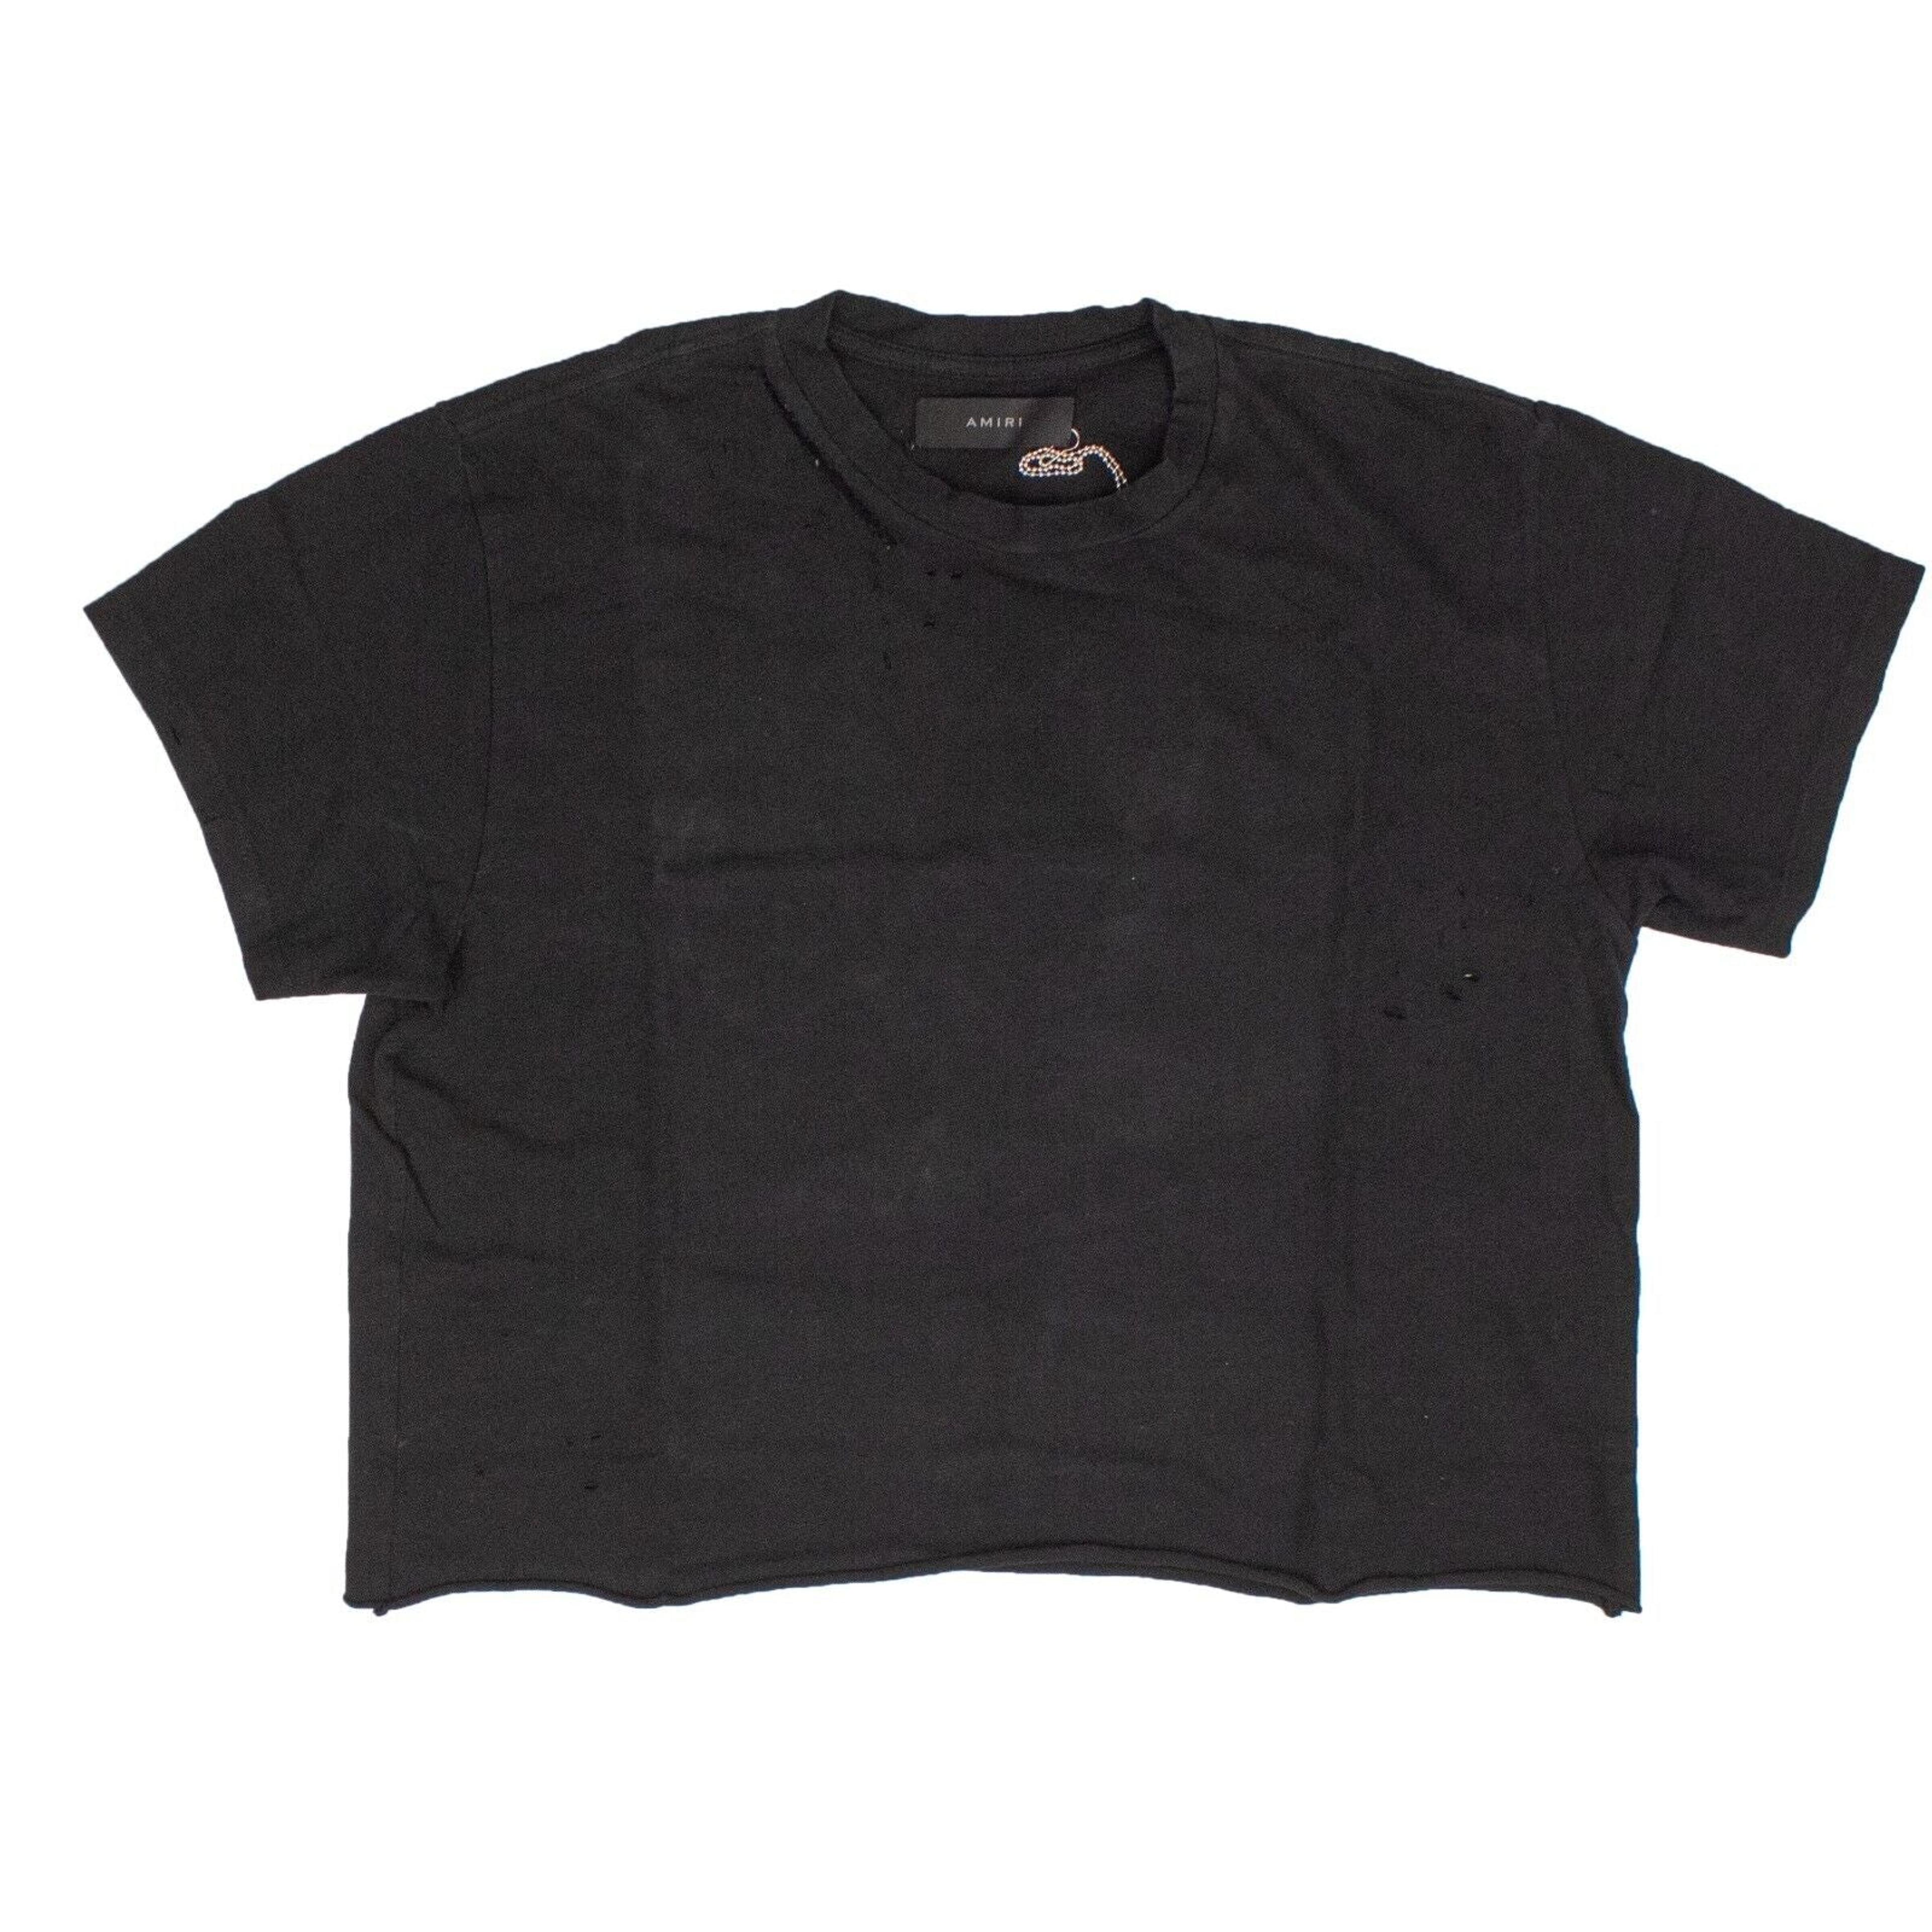 Alternate View 1 of Black Slash Cotton T-Shirt